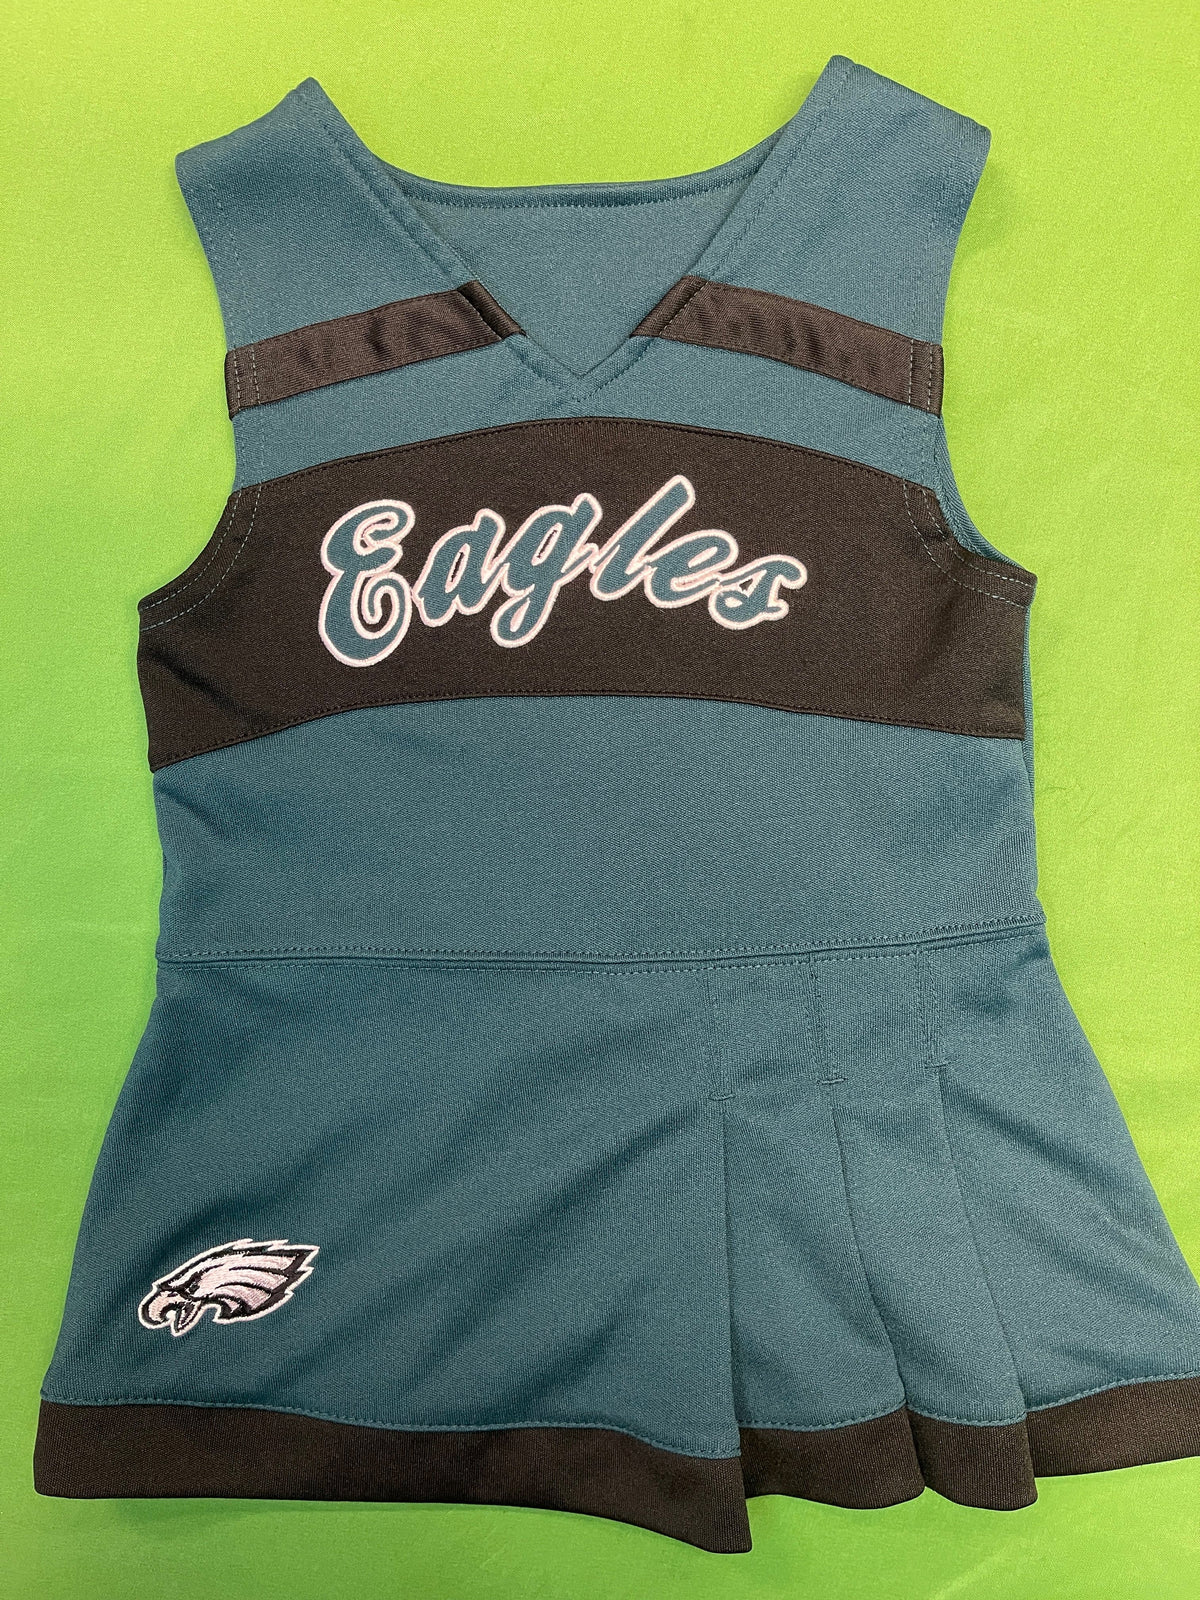 NFL Philadelphia Eagles Stitched Baby Cheerleader Dress Toddler 2T